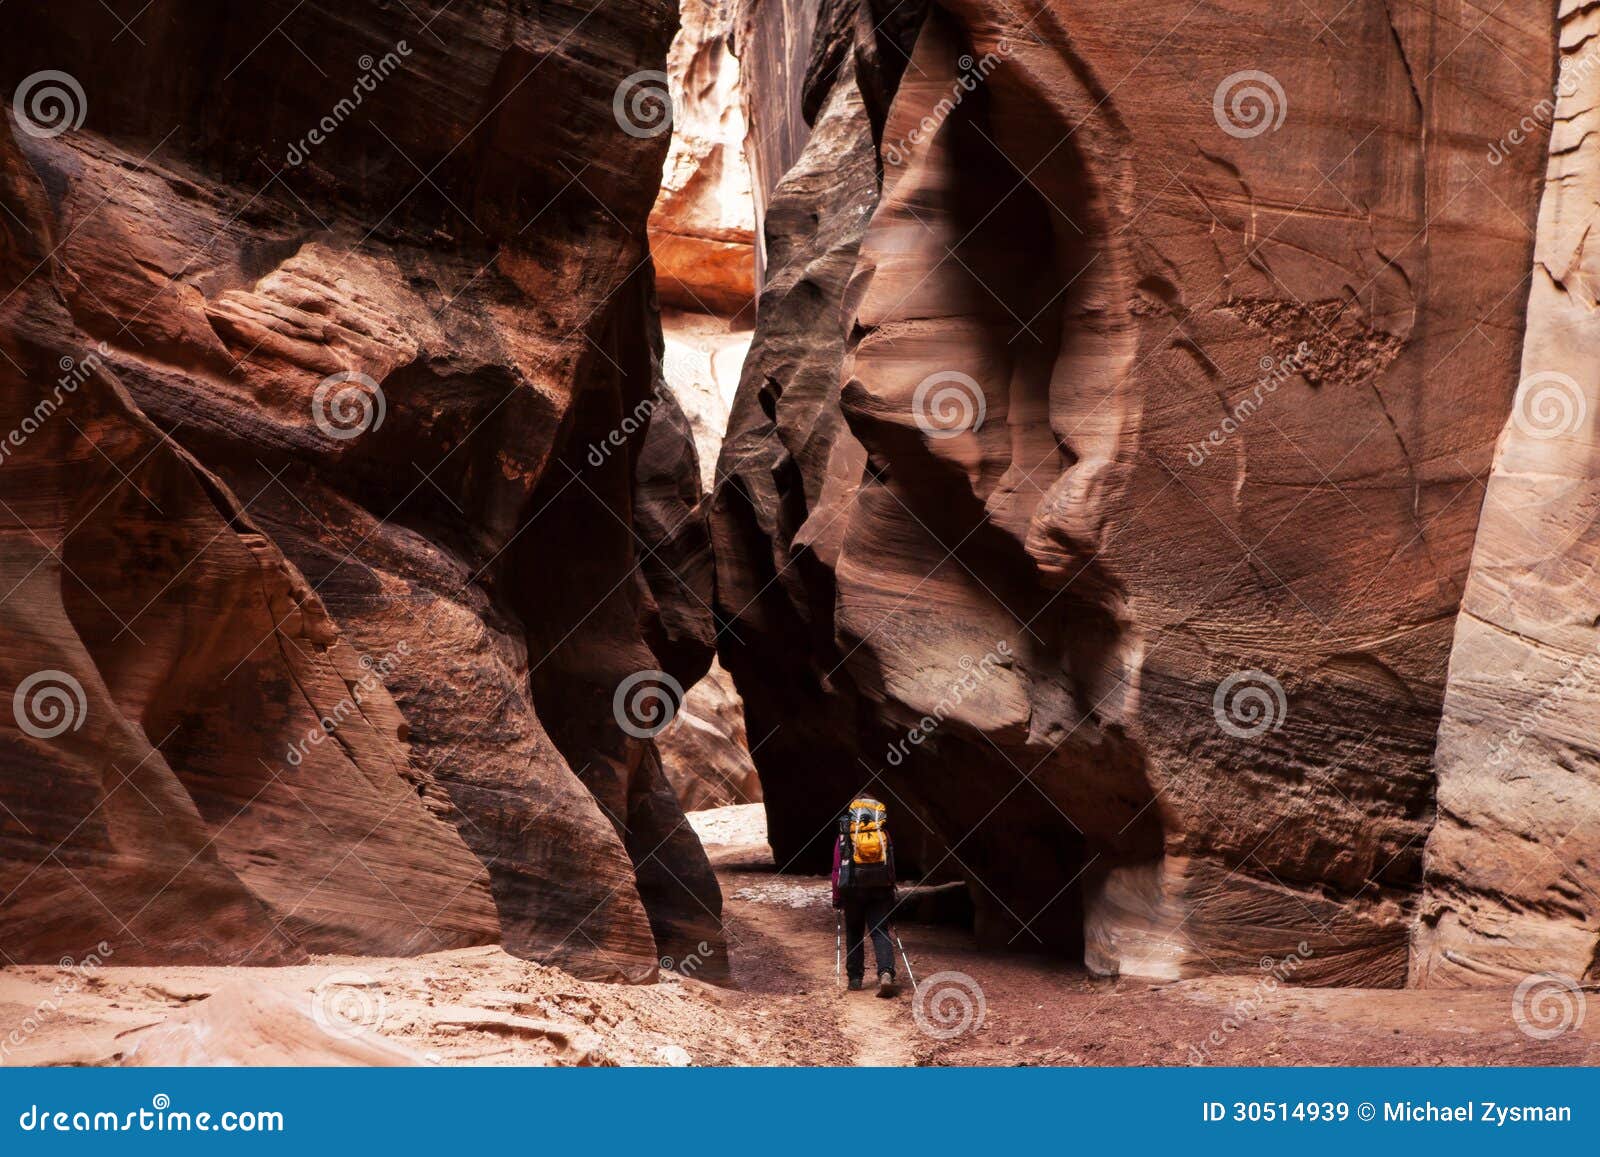 canyon backpacker